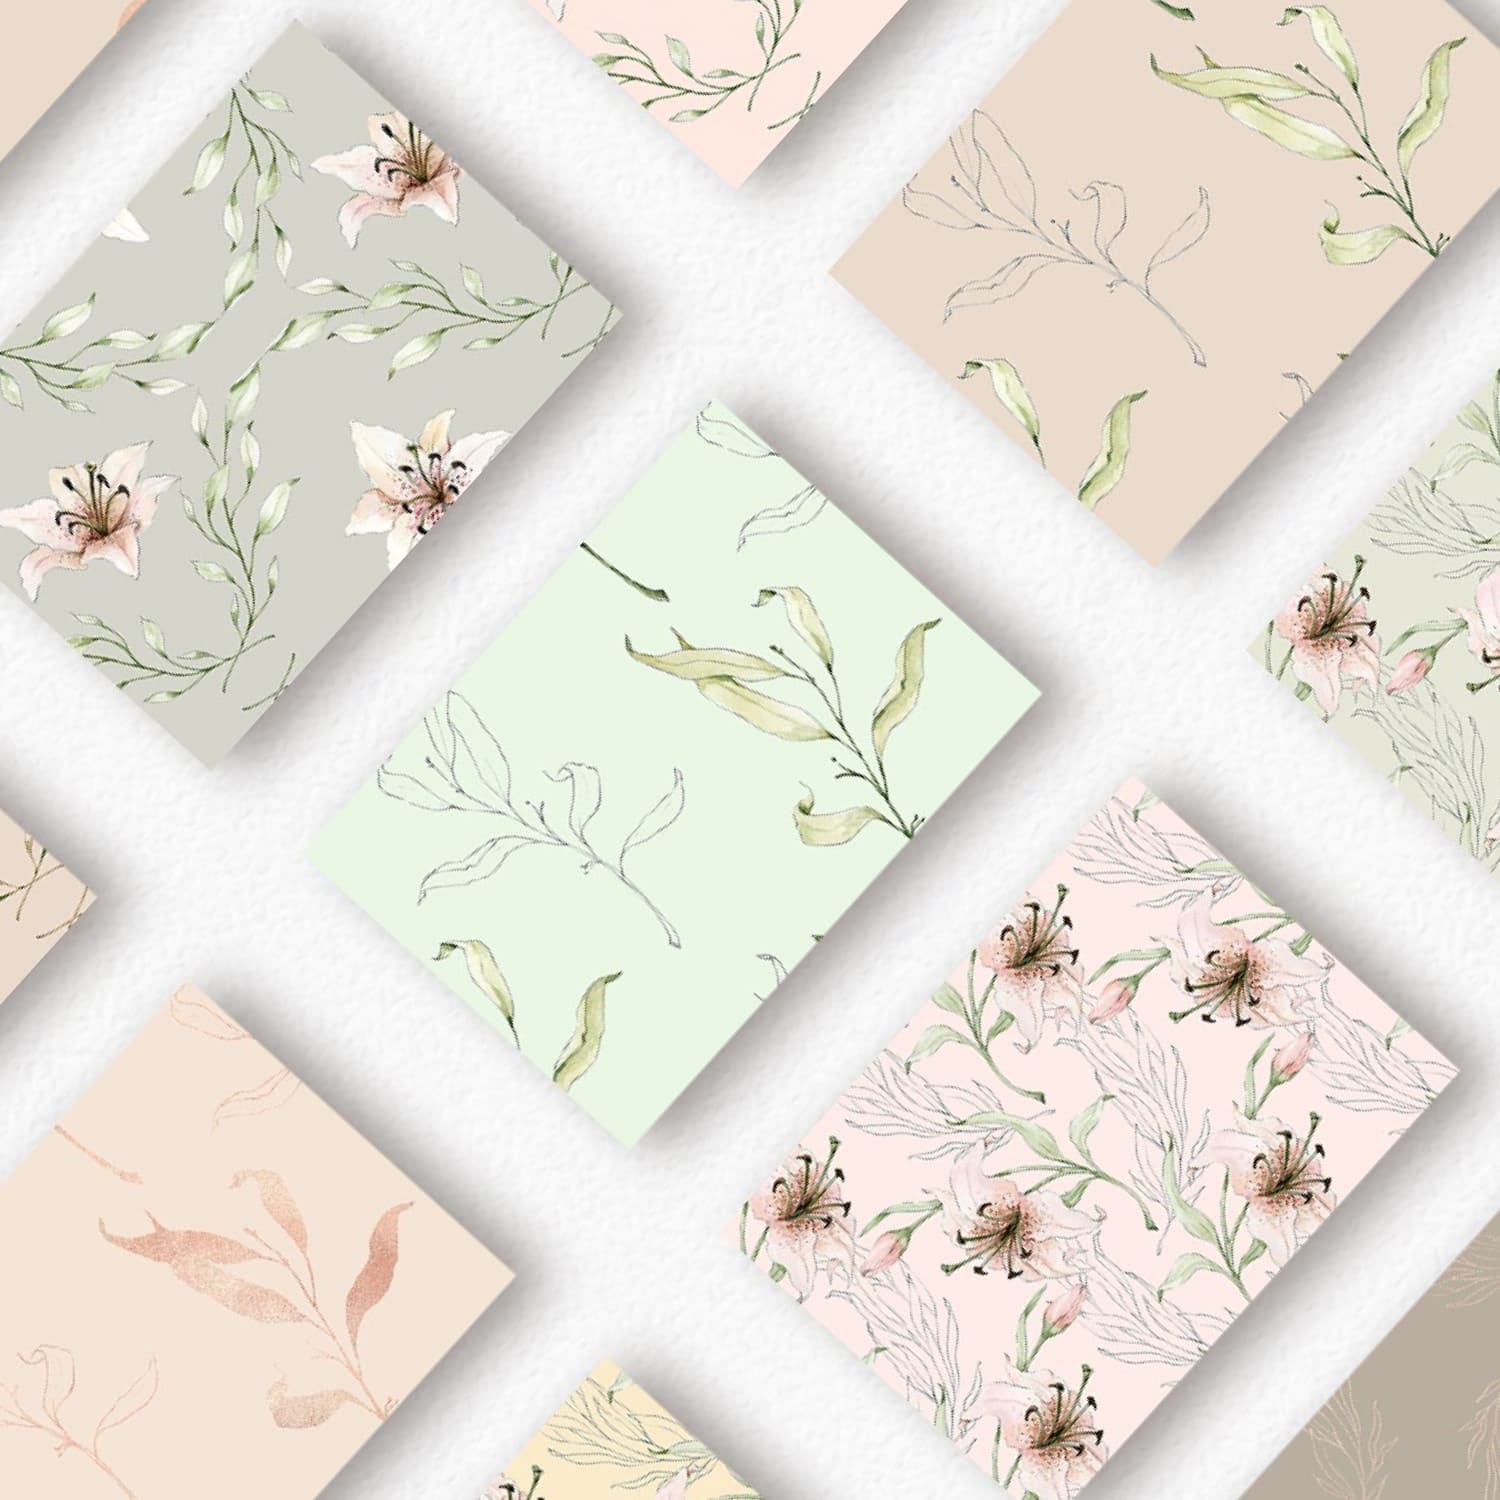 Diverse of floral patterns for your design.